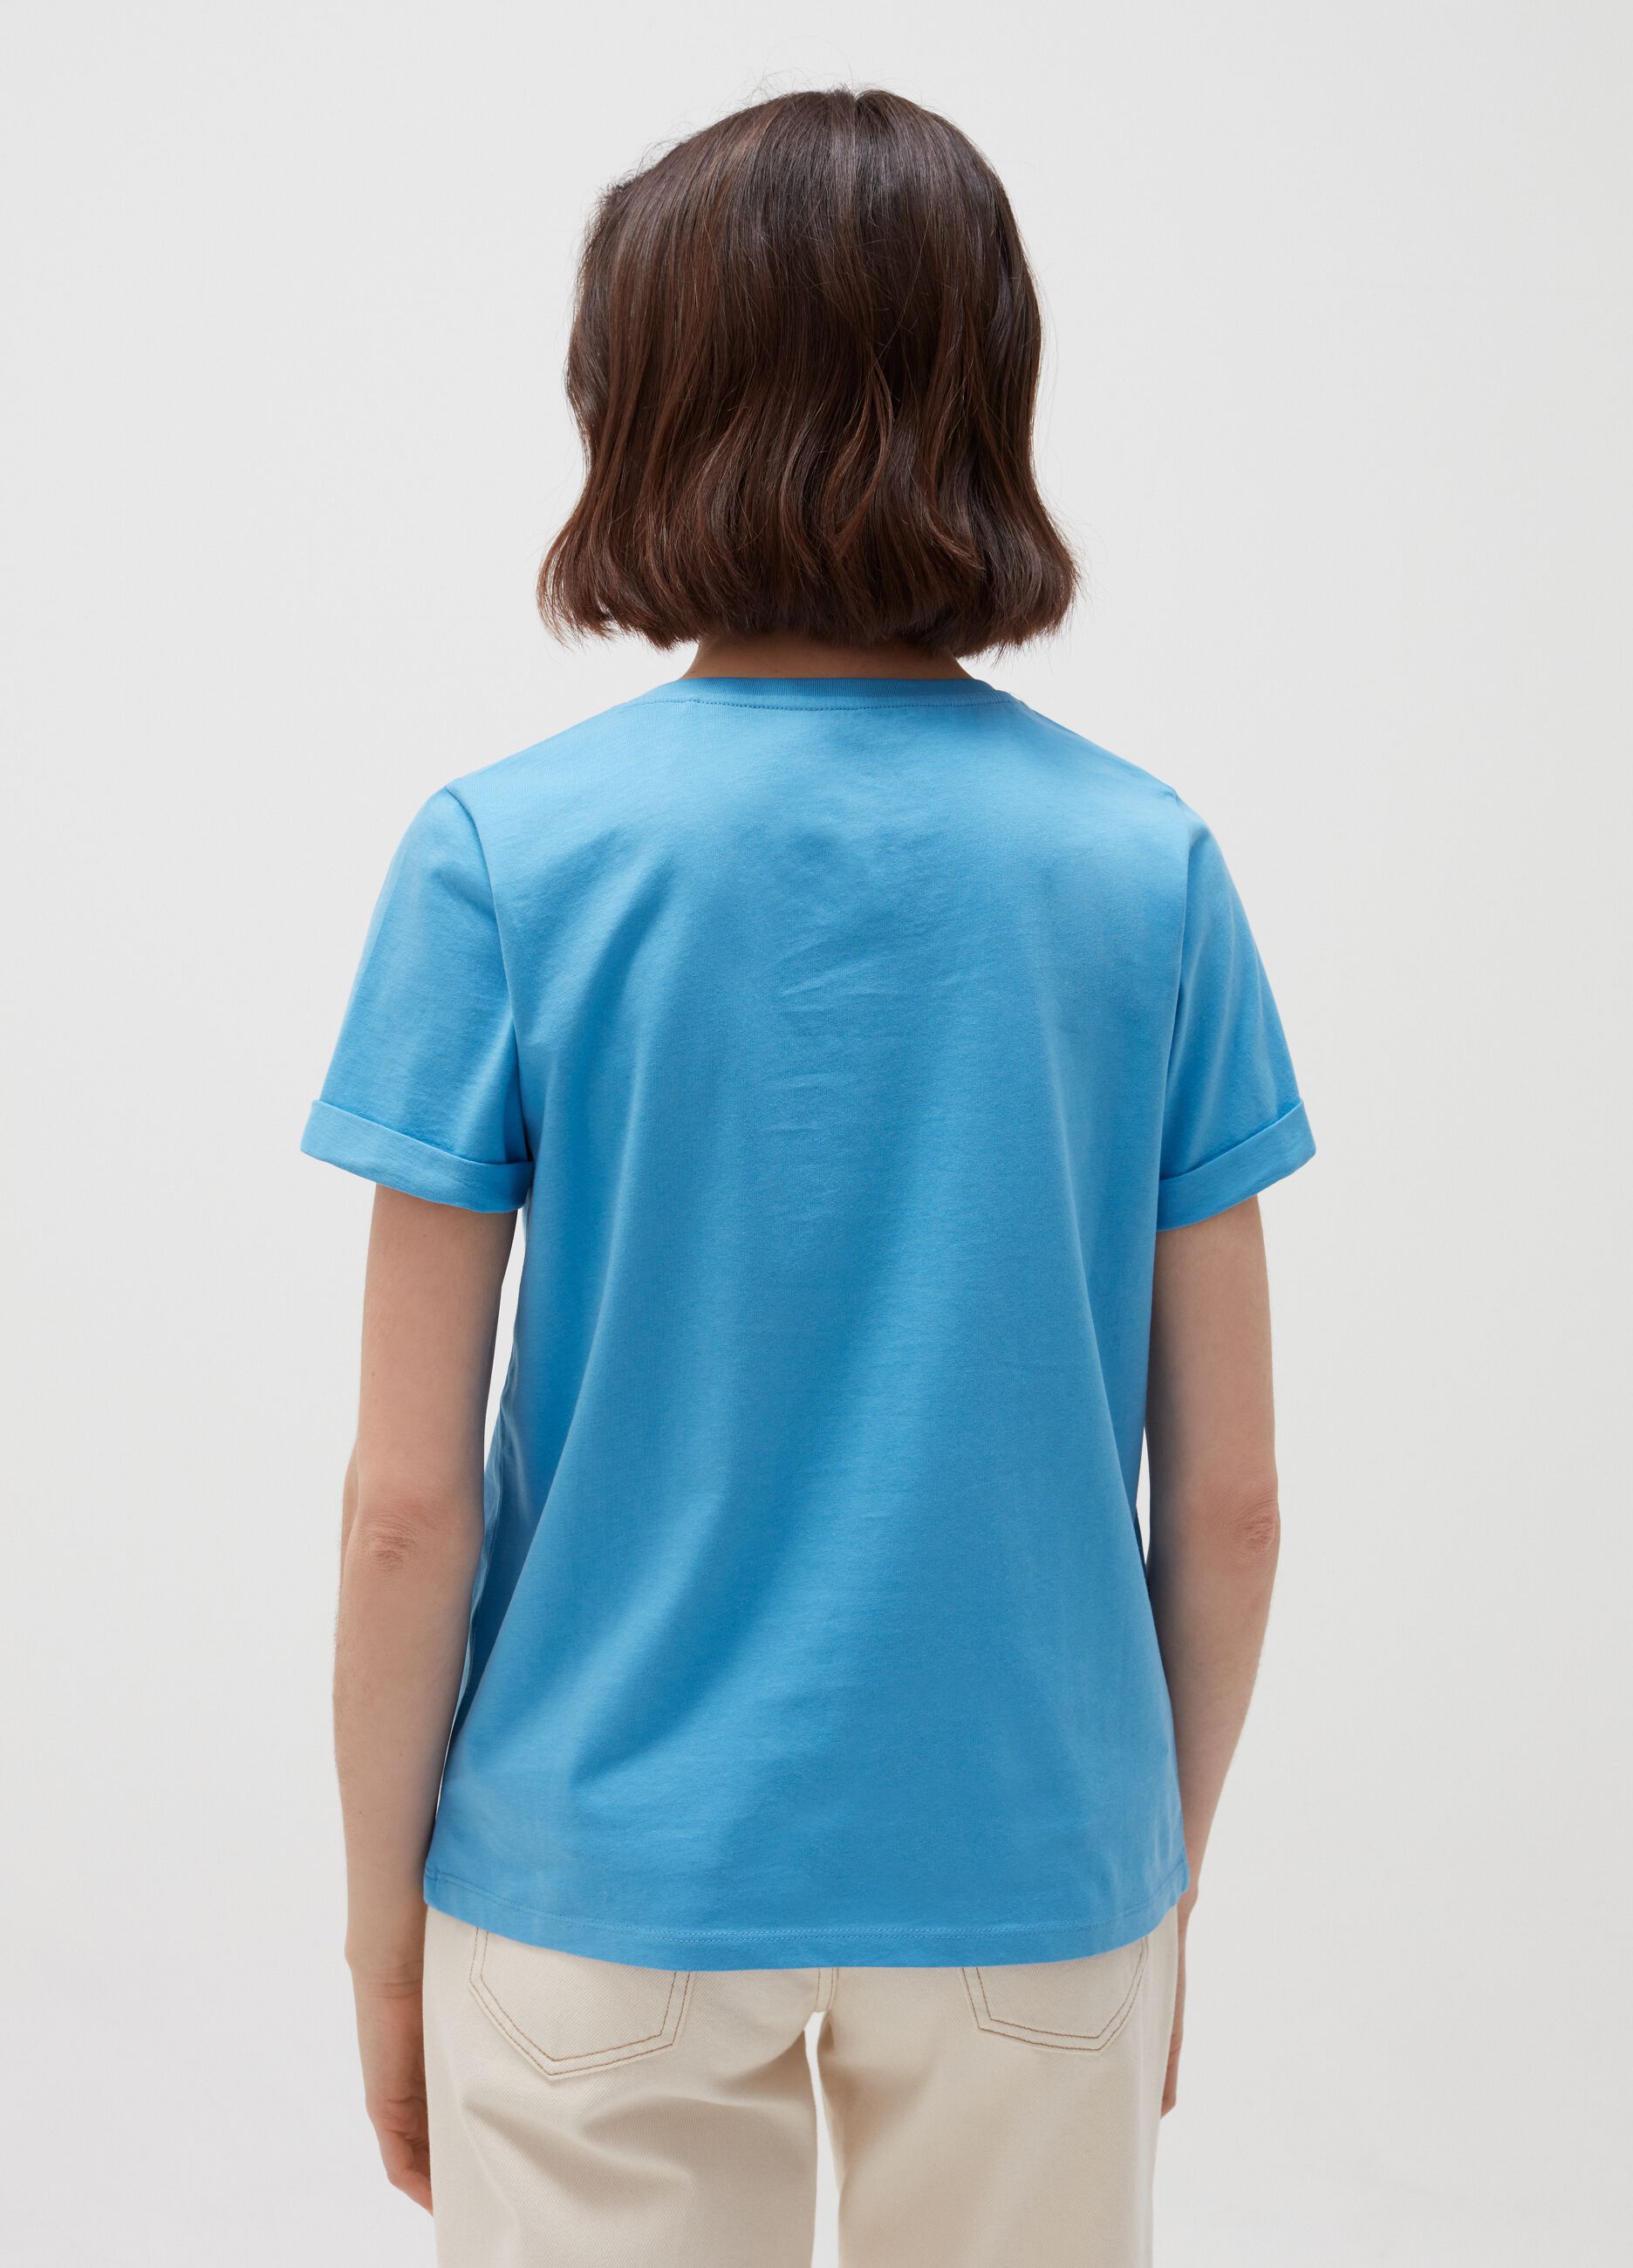 Supima cotton T-shirt with V neck